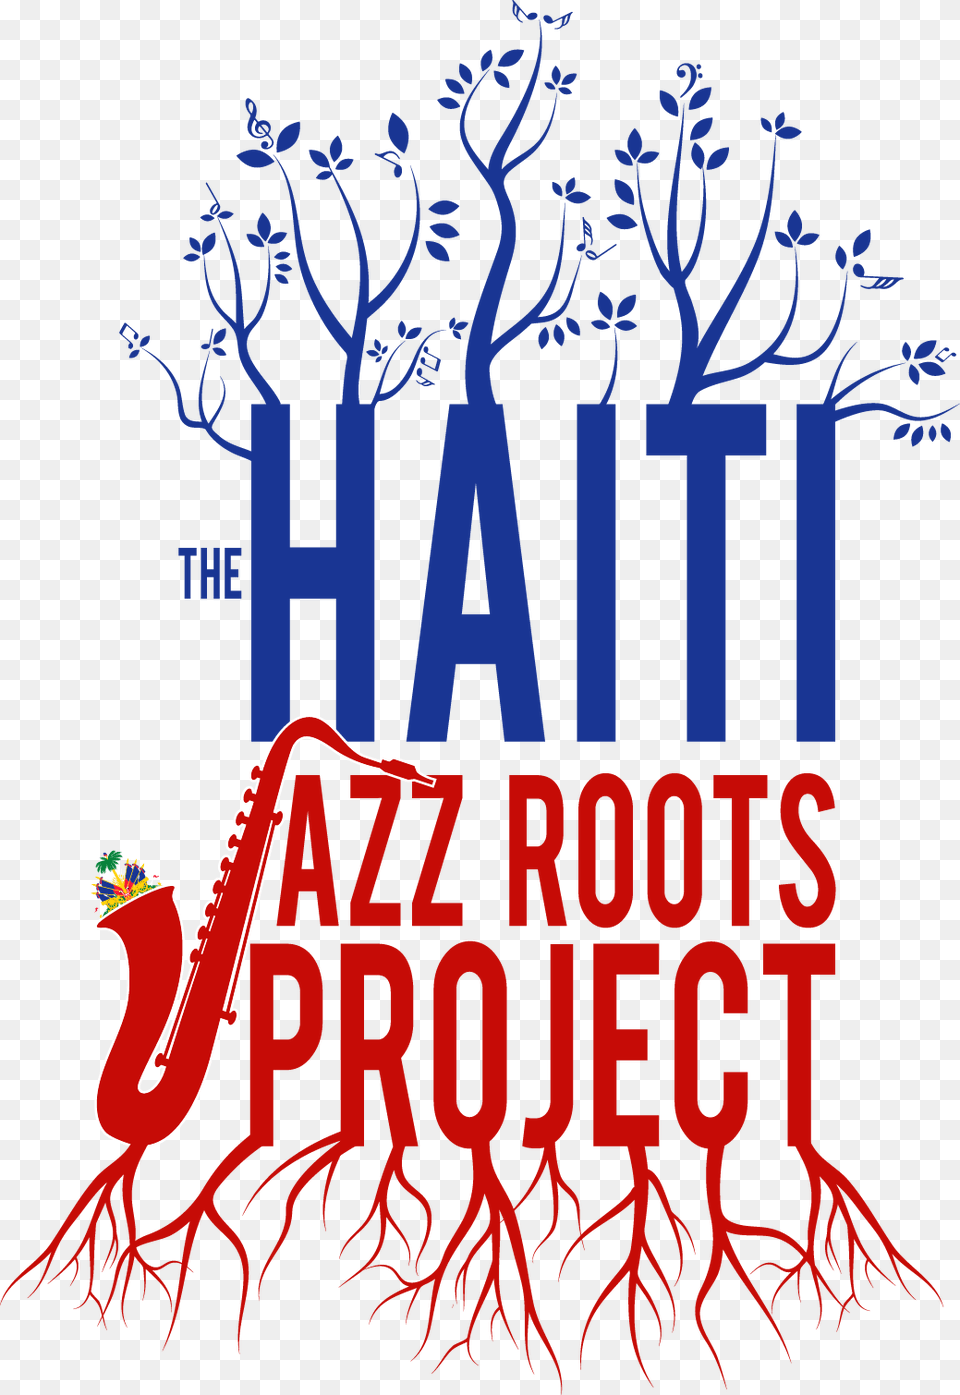 Jazz At Moca Haiti Jazzltbrgtroots Project Illustration, Book, Publication Free Transparent Png